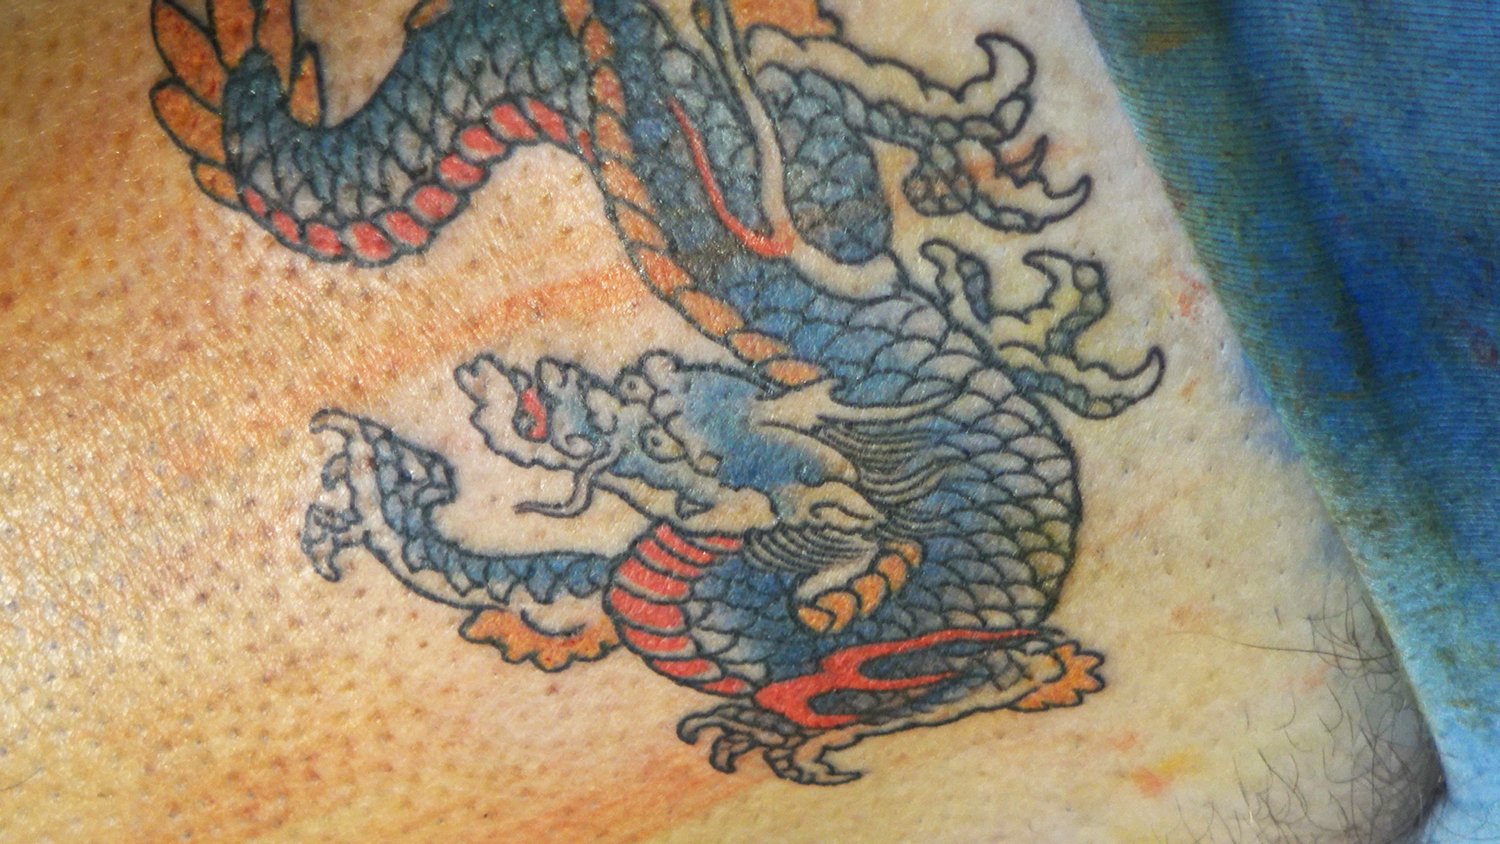 Dragon tattoo by ami james, tattoo convention